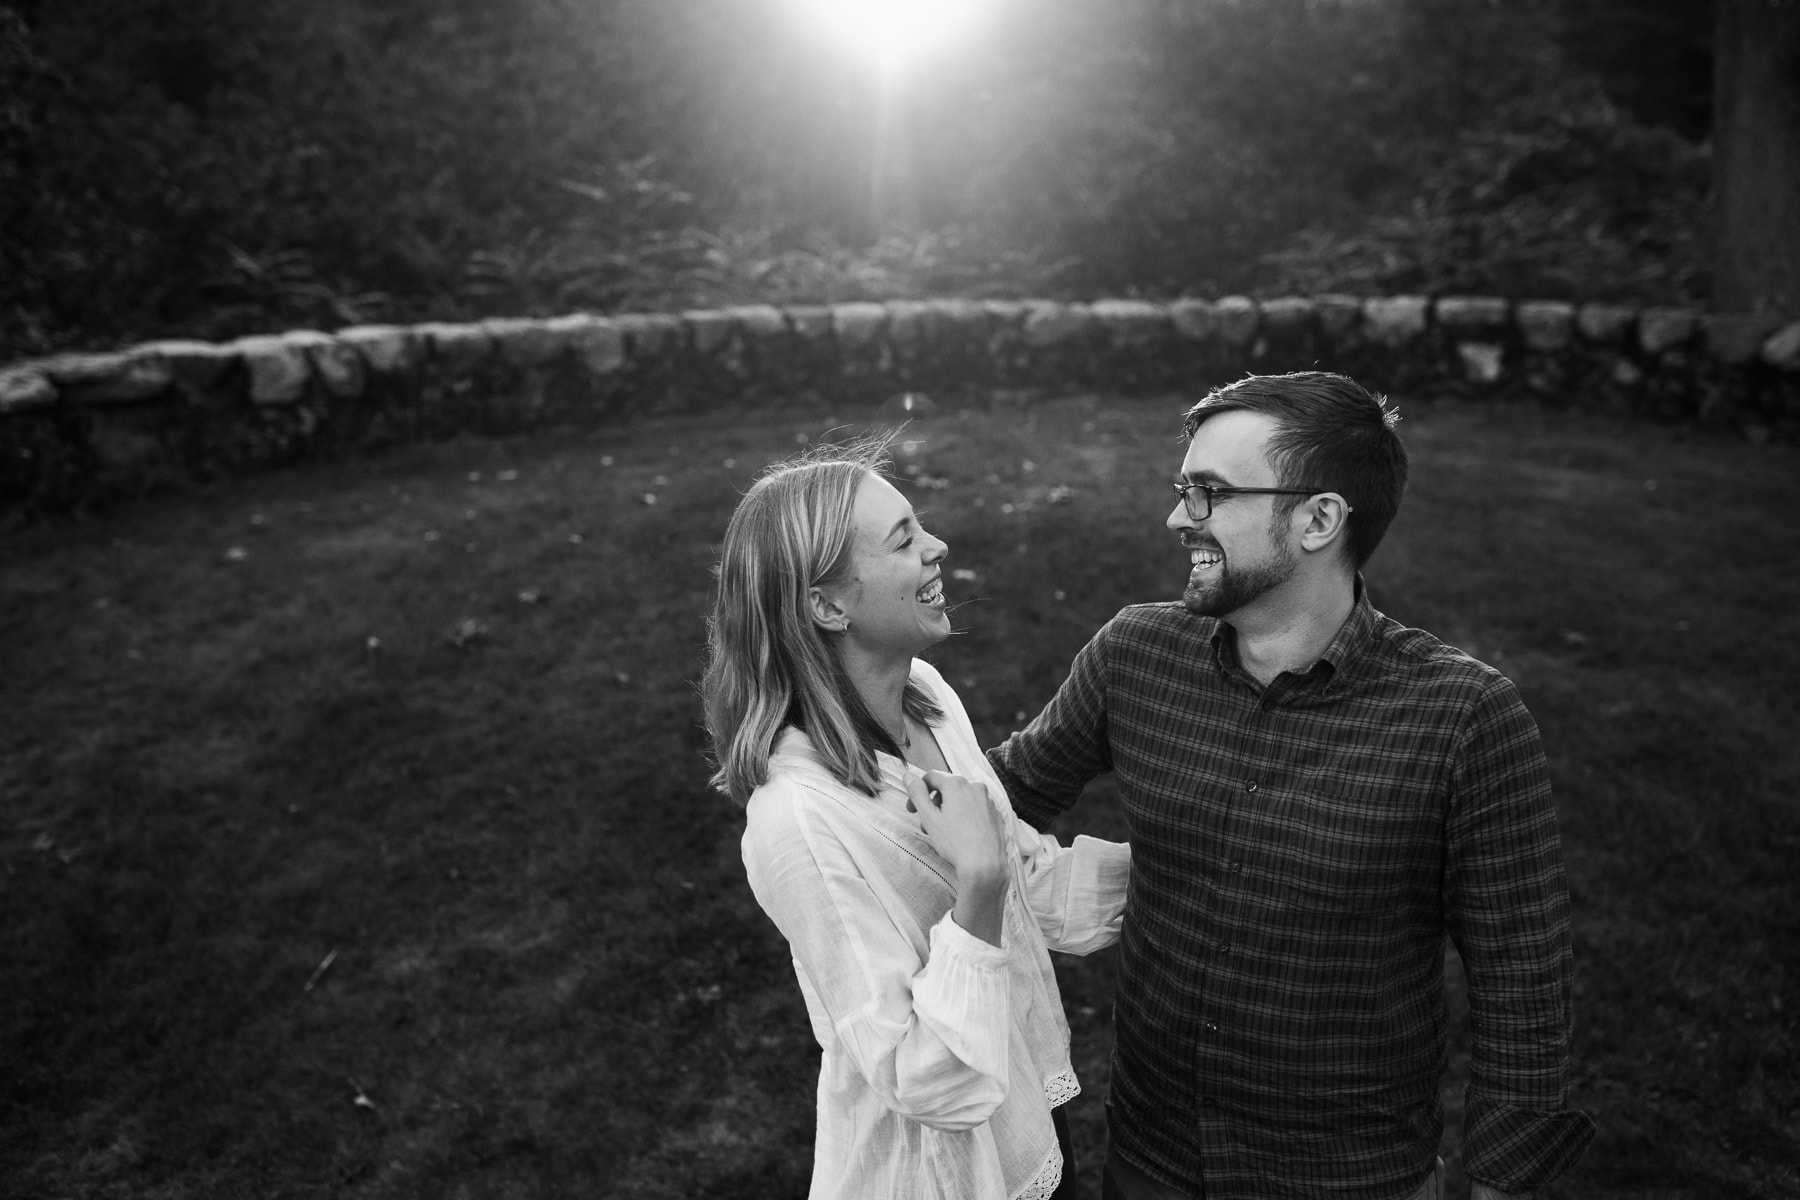 Practice session of Haley and Brendan | Stonehurst engagement session | Kelly Benvenuto Photography | Boston wedding photographer